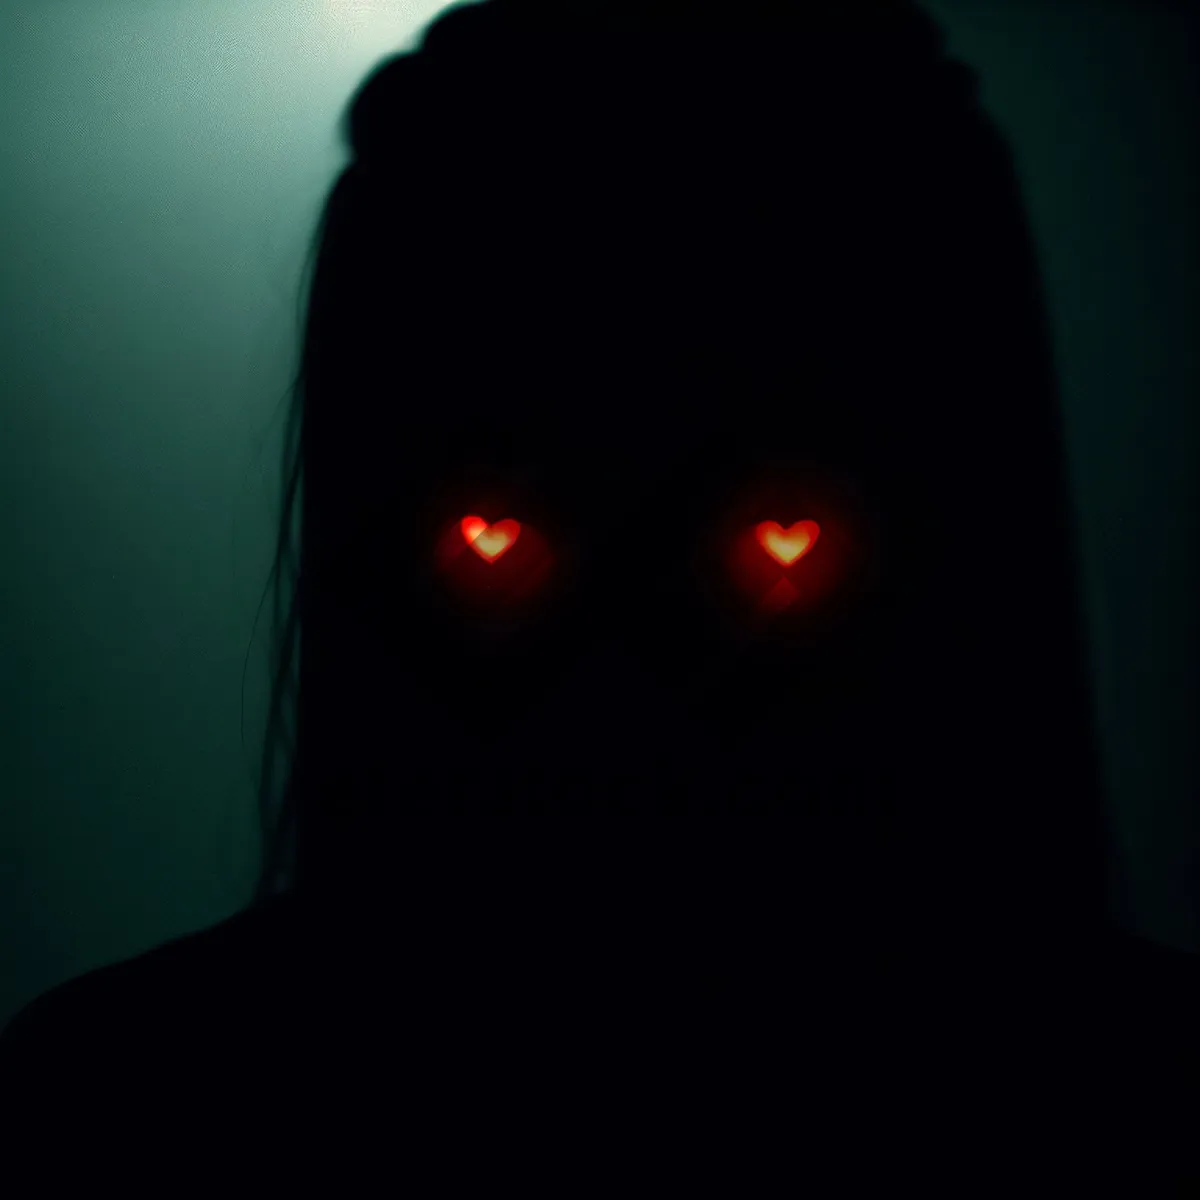 Picture of Spooky Jack-o'-Lantern illuminating the dark night.